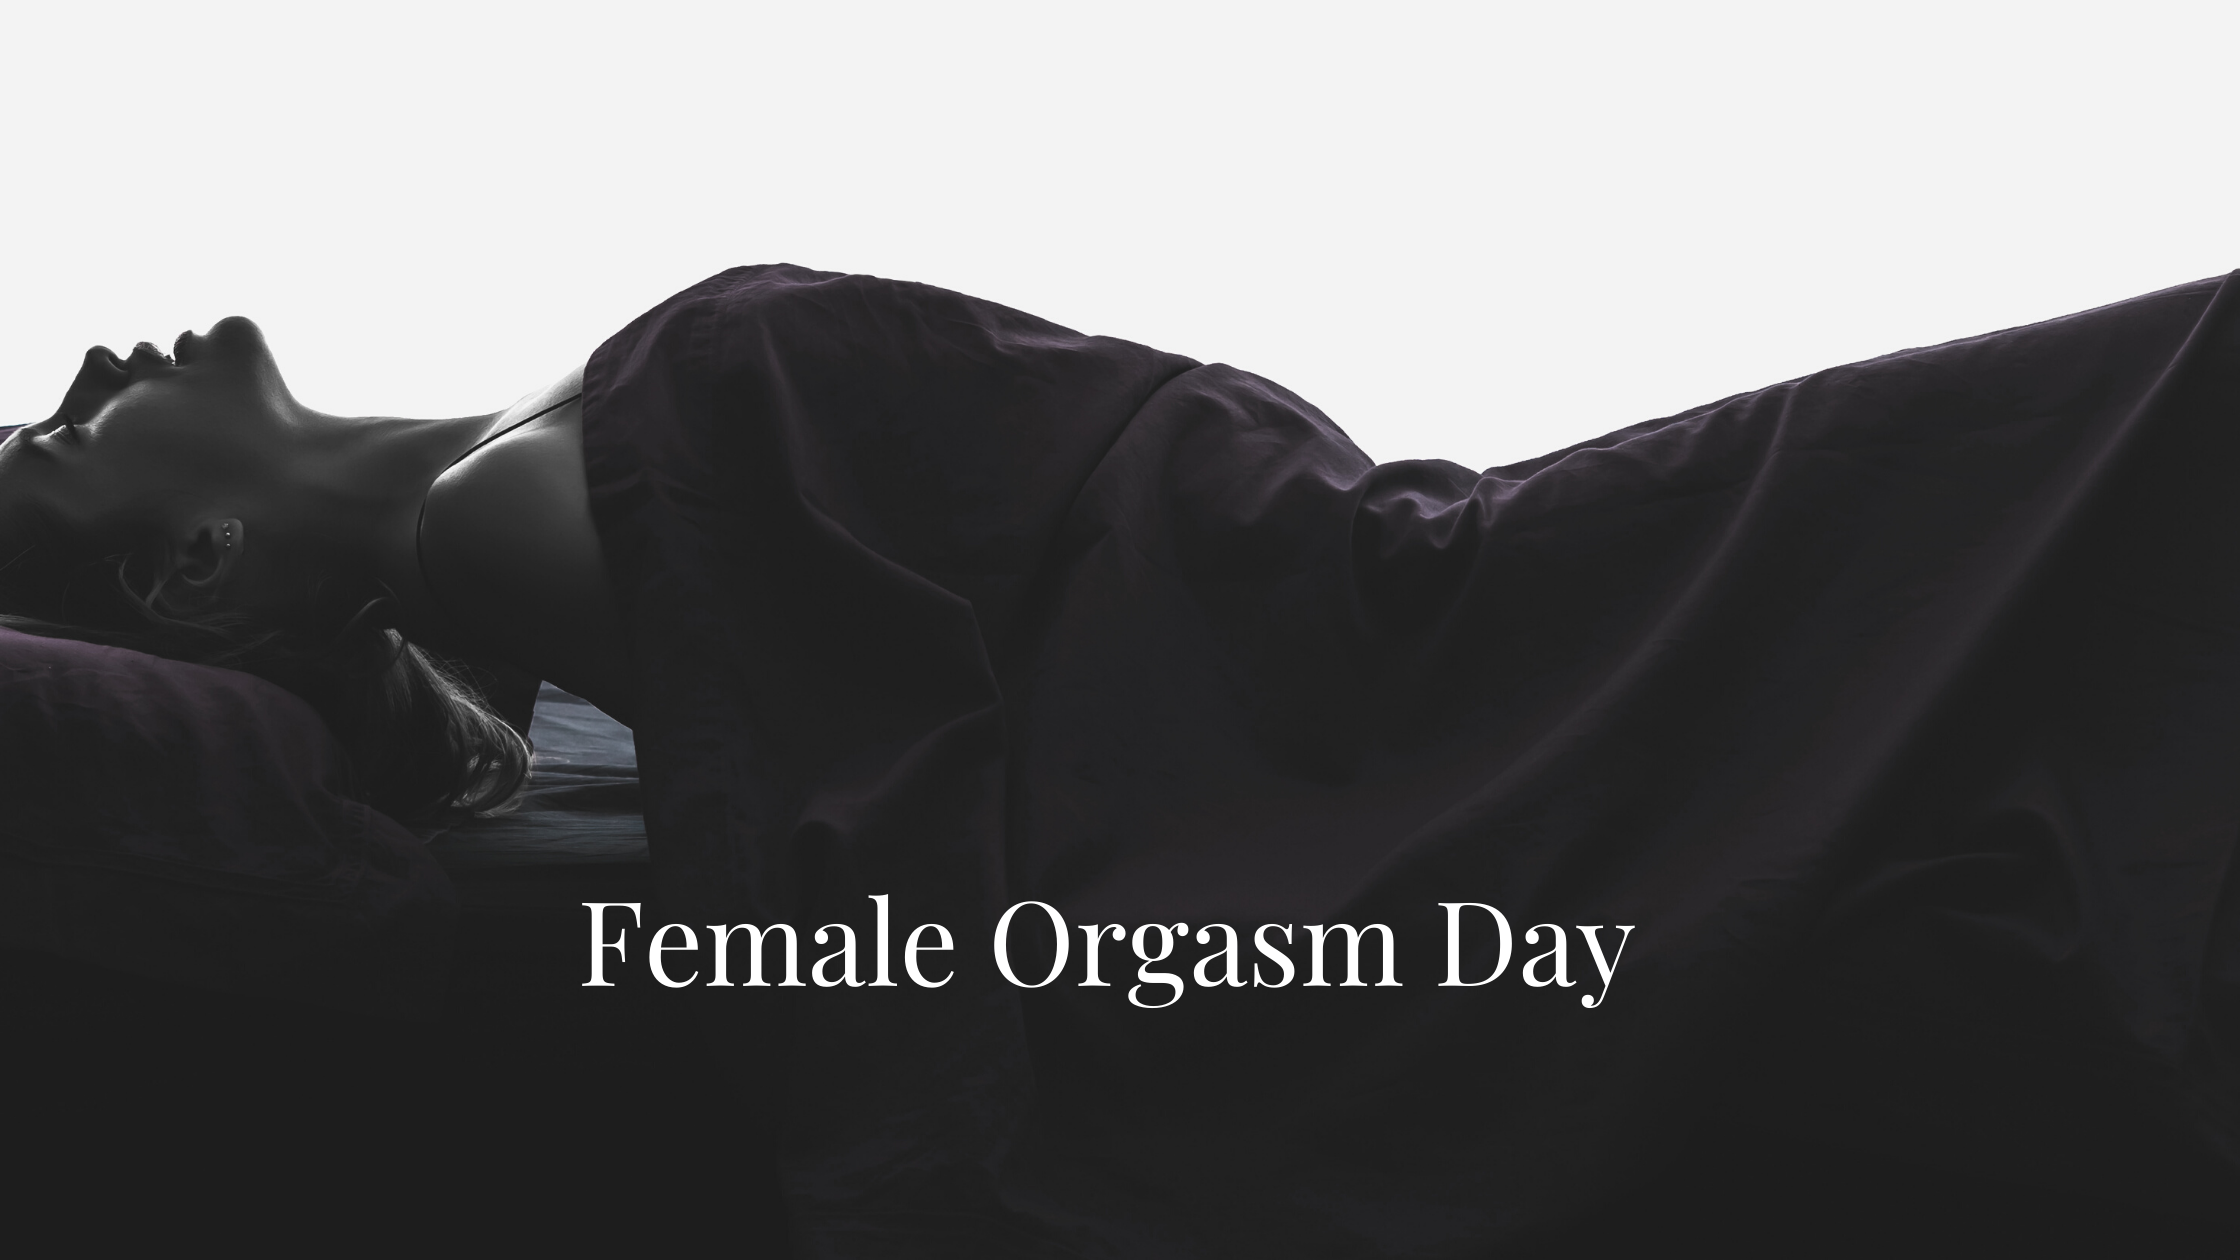 An Orgasm A Day